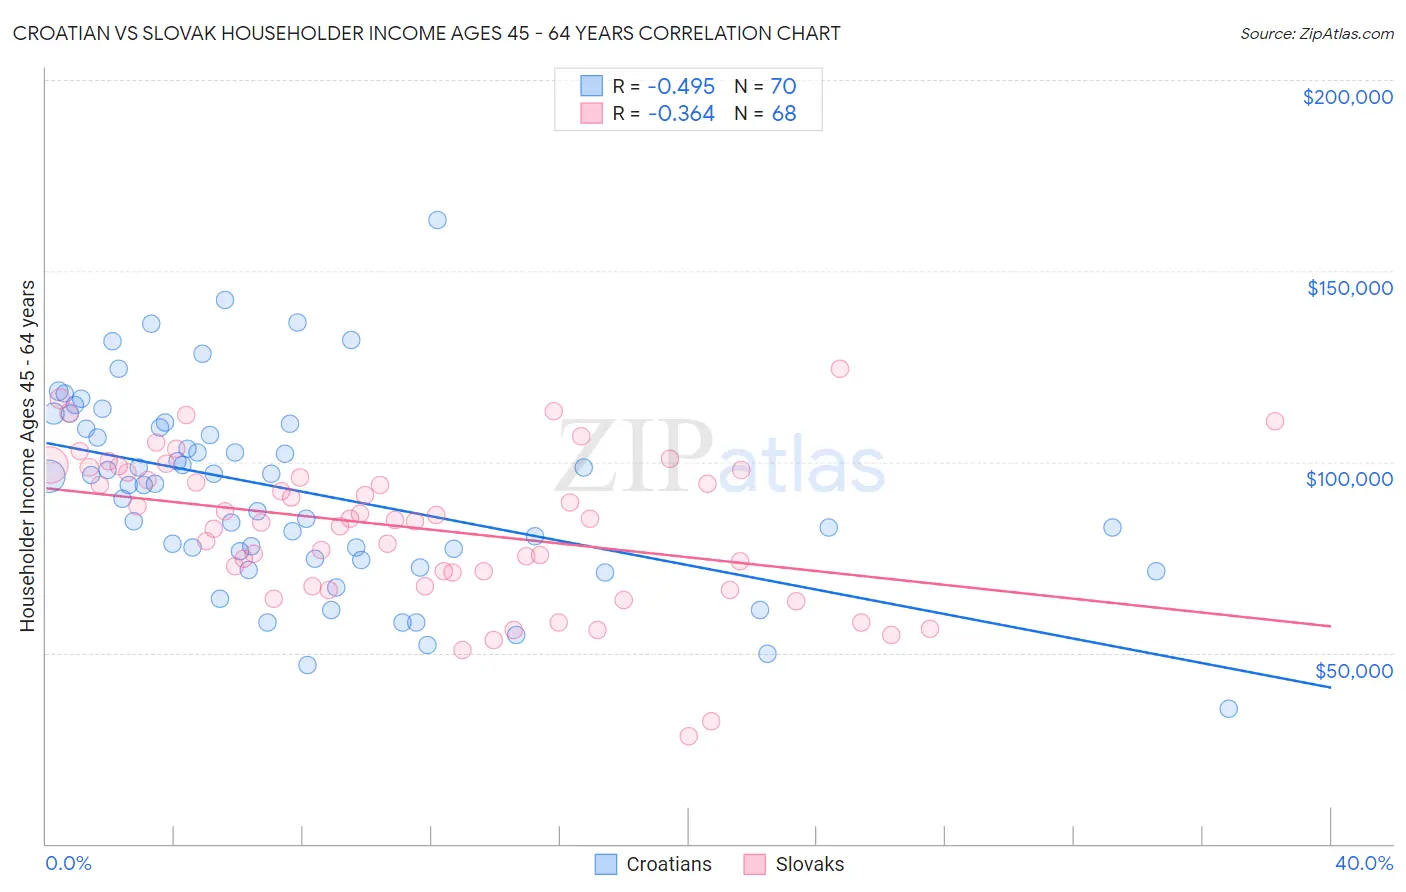 Croatian vs Slovak Householder Income Ages 45 - 64 years